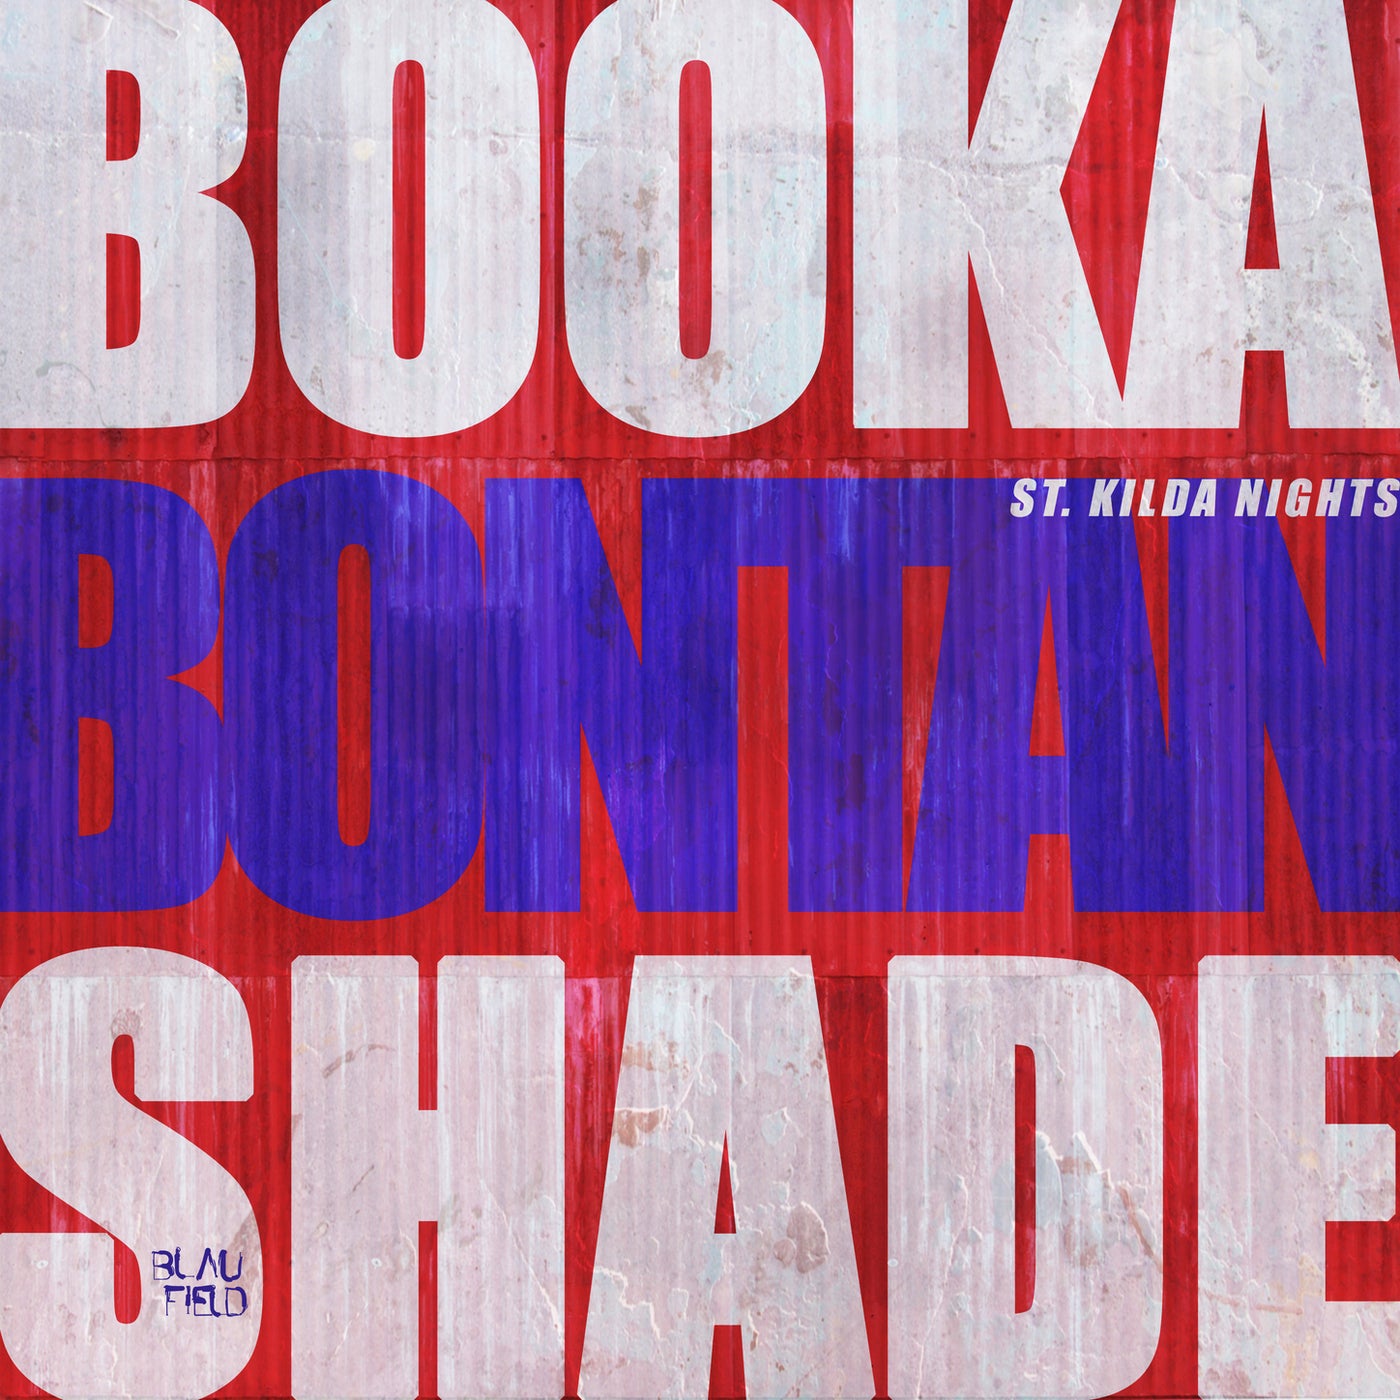 Booka Shade, Bontan - St. Kilda Nights (Original Mix)